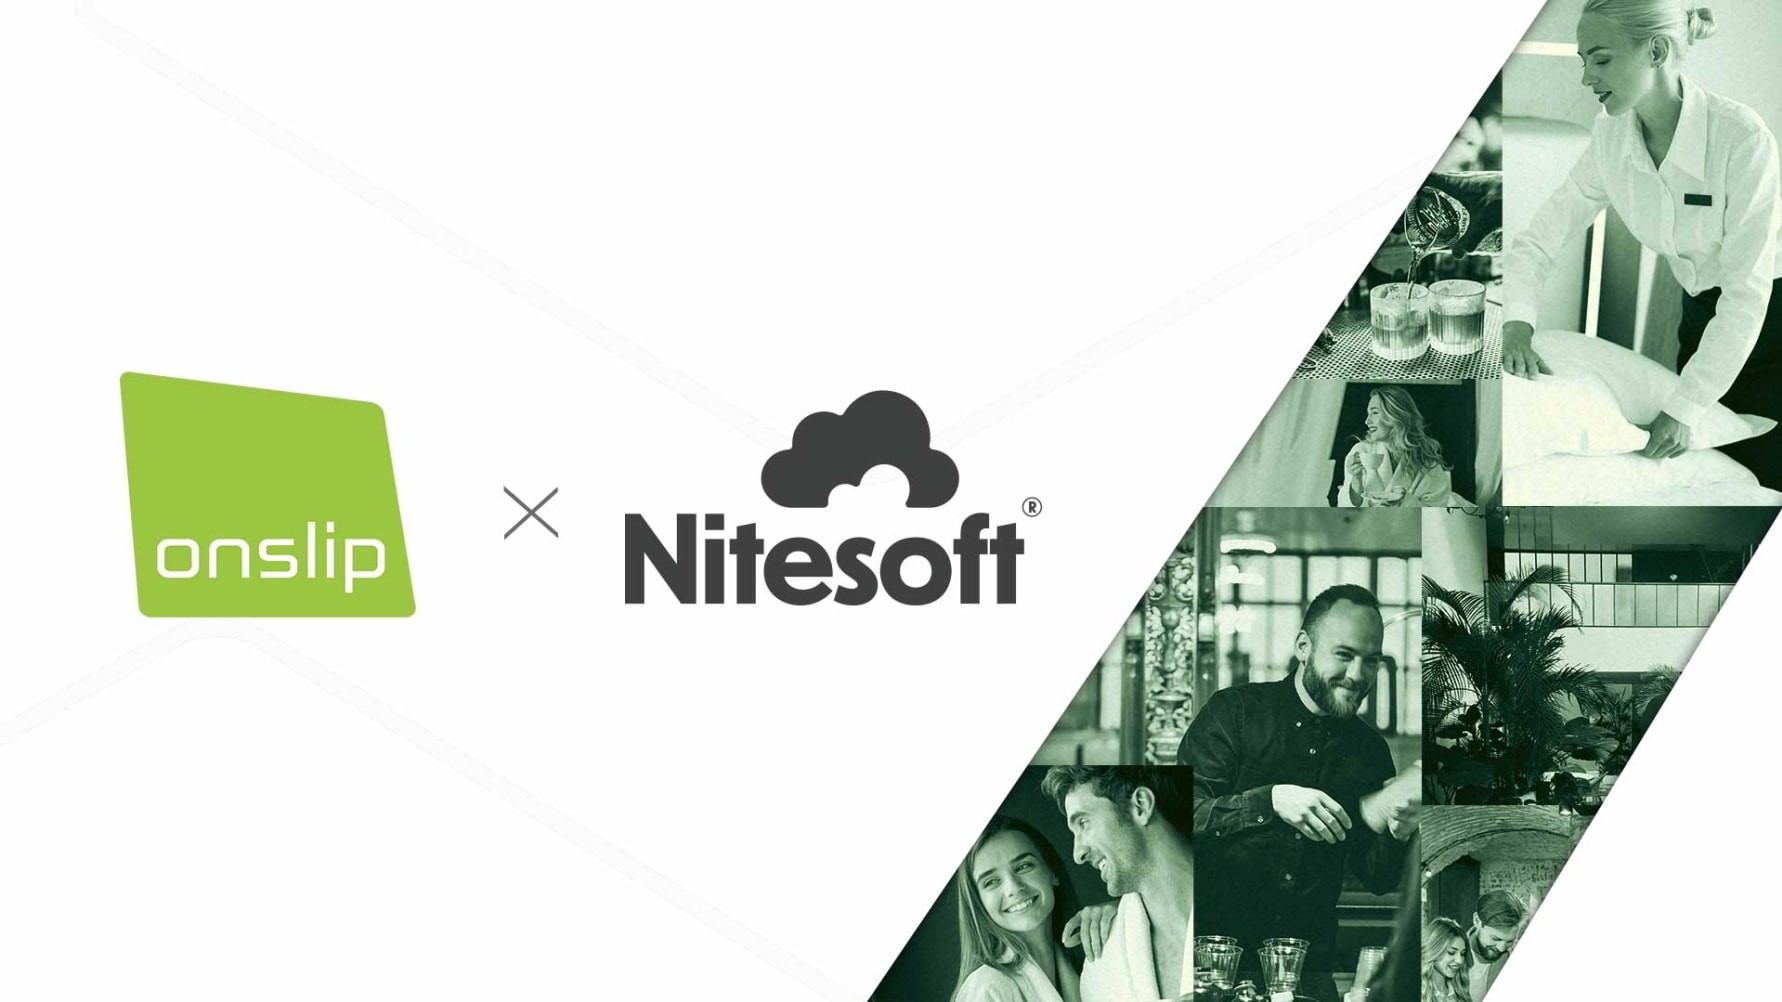 Onslip x Nitesoft - Nytt samarbete kopplar ihop hotell- och restaurangsystem